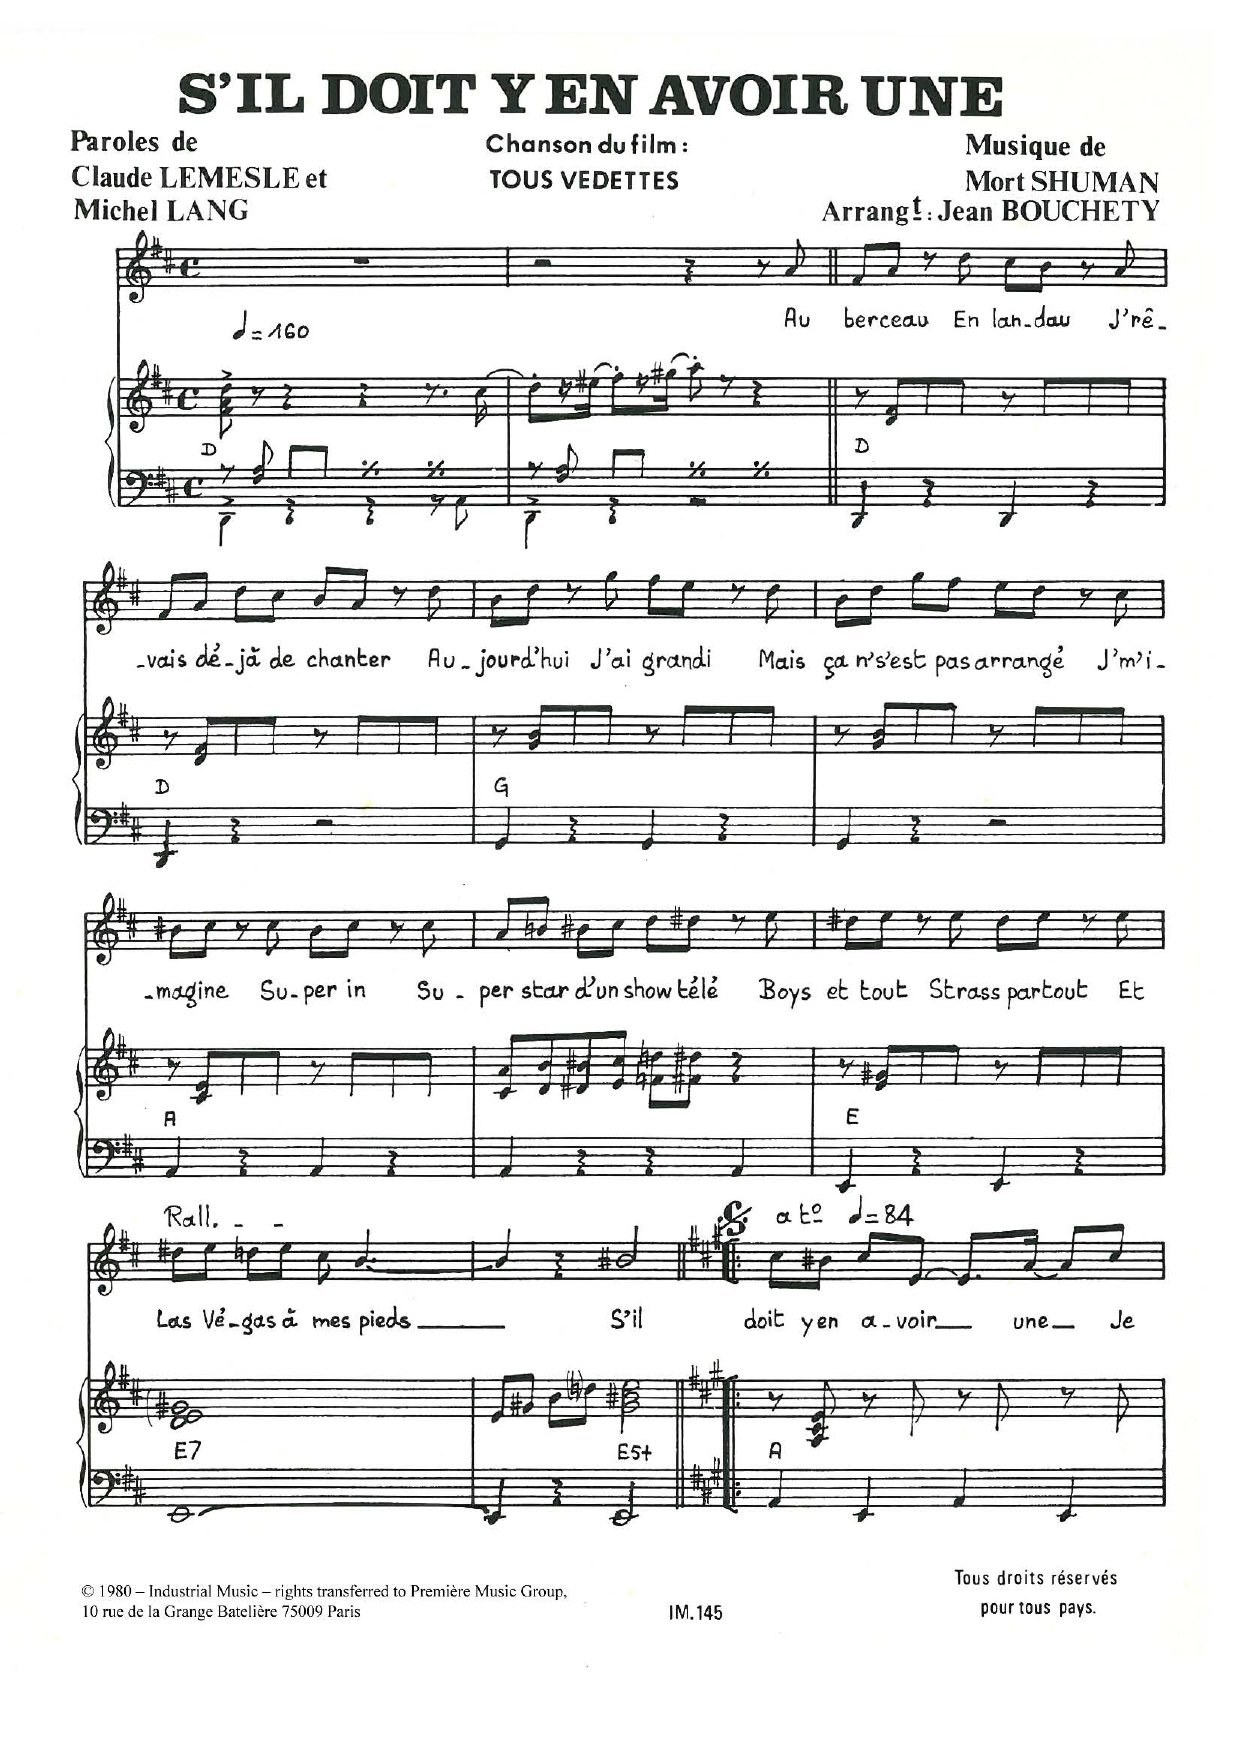 Mort Shuman S'il Doit Y En Avoir Une Sheet Music Notes & Chords for Piano & Vocal - Download or Print PDF